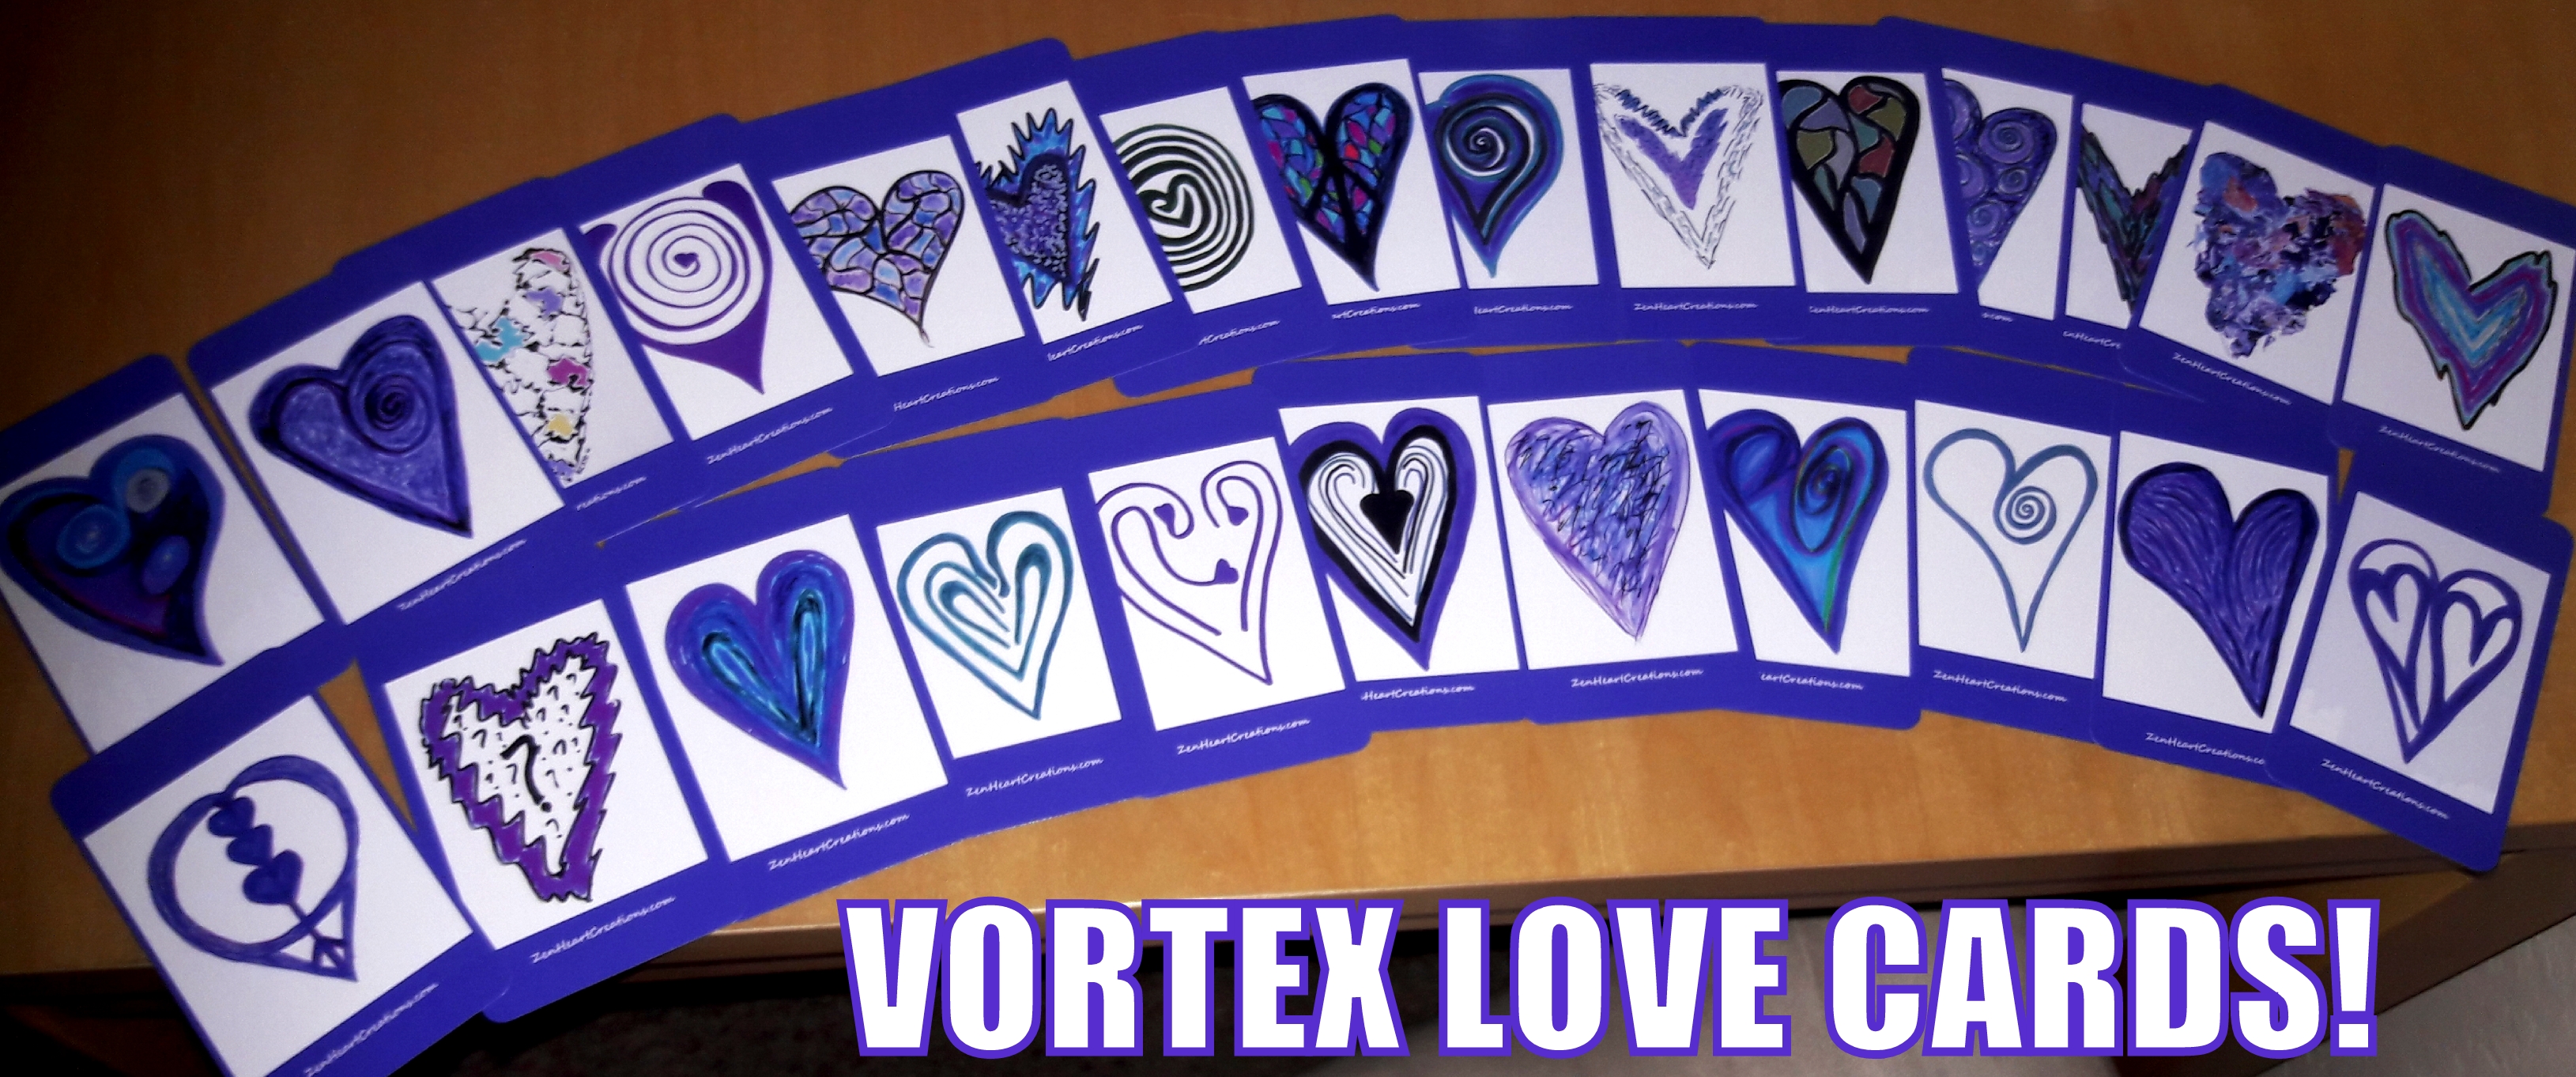 vortex heart cards spread